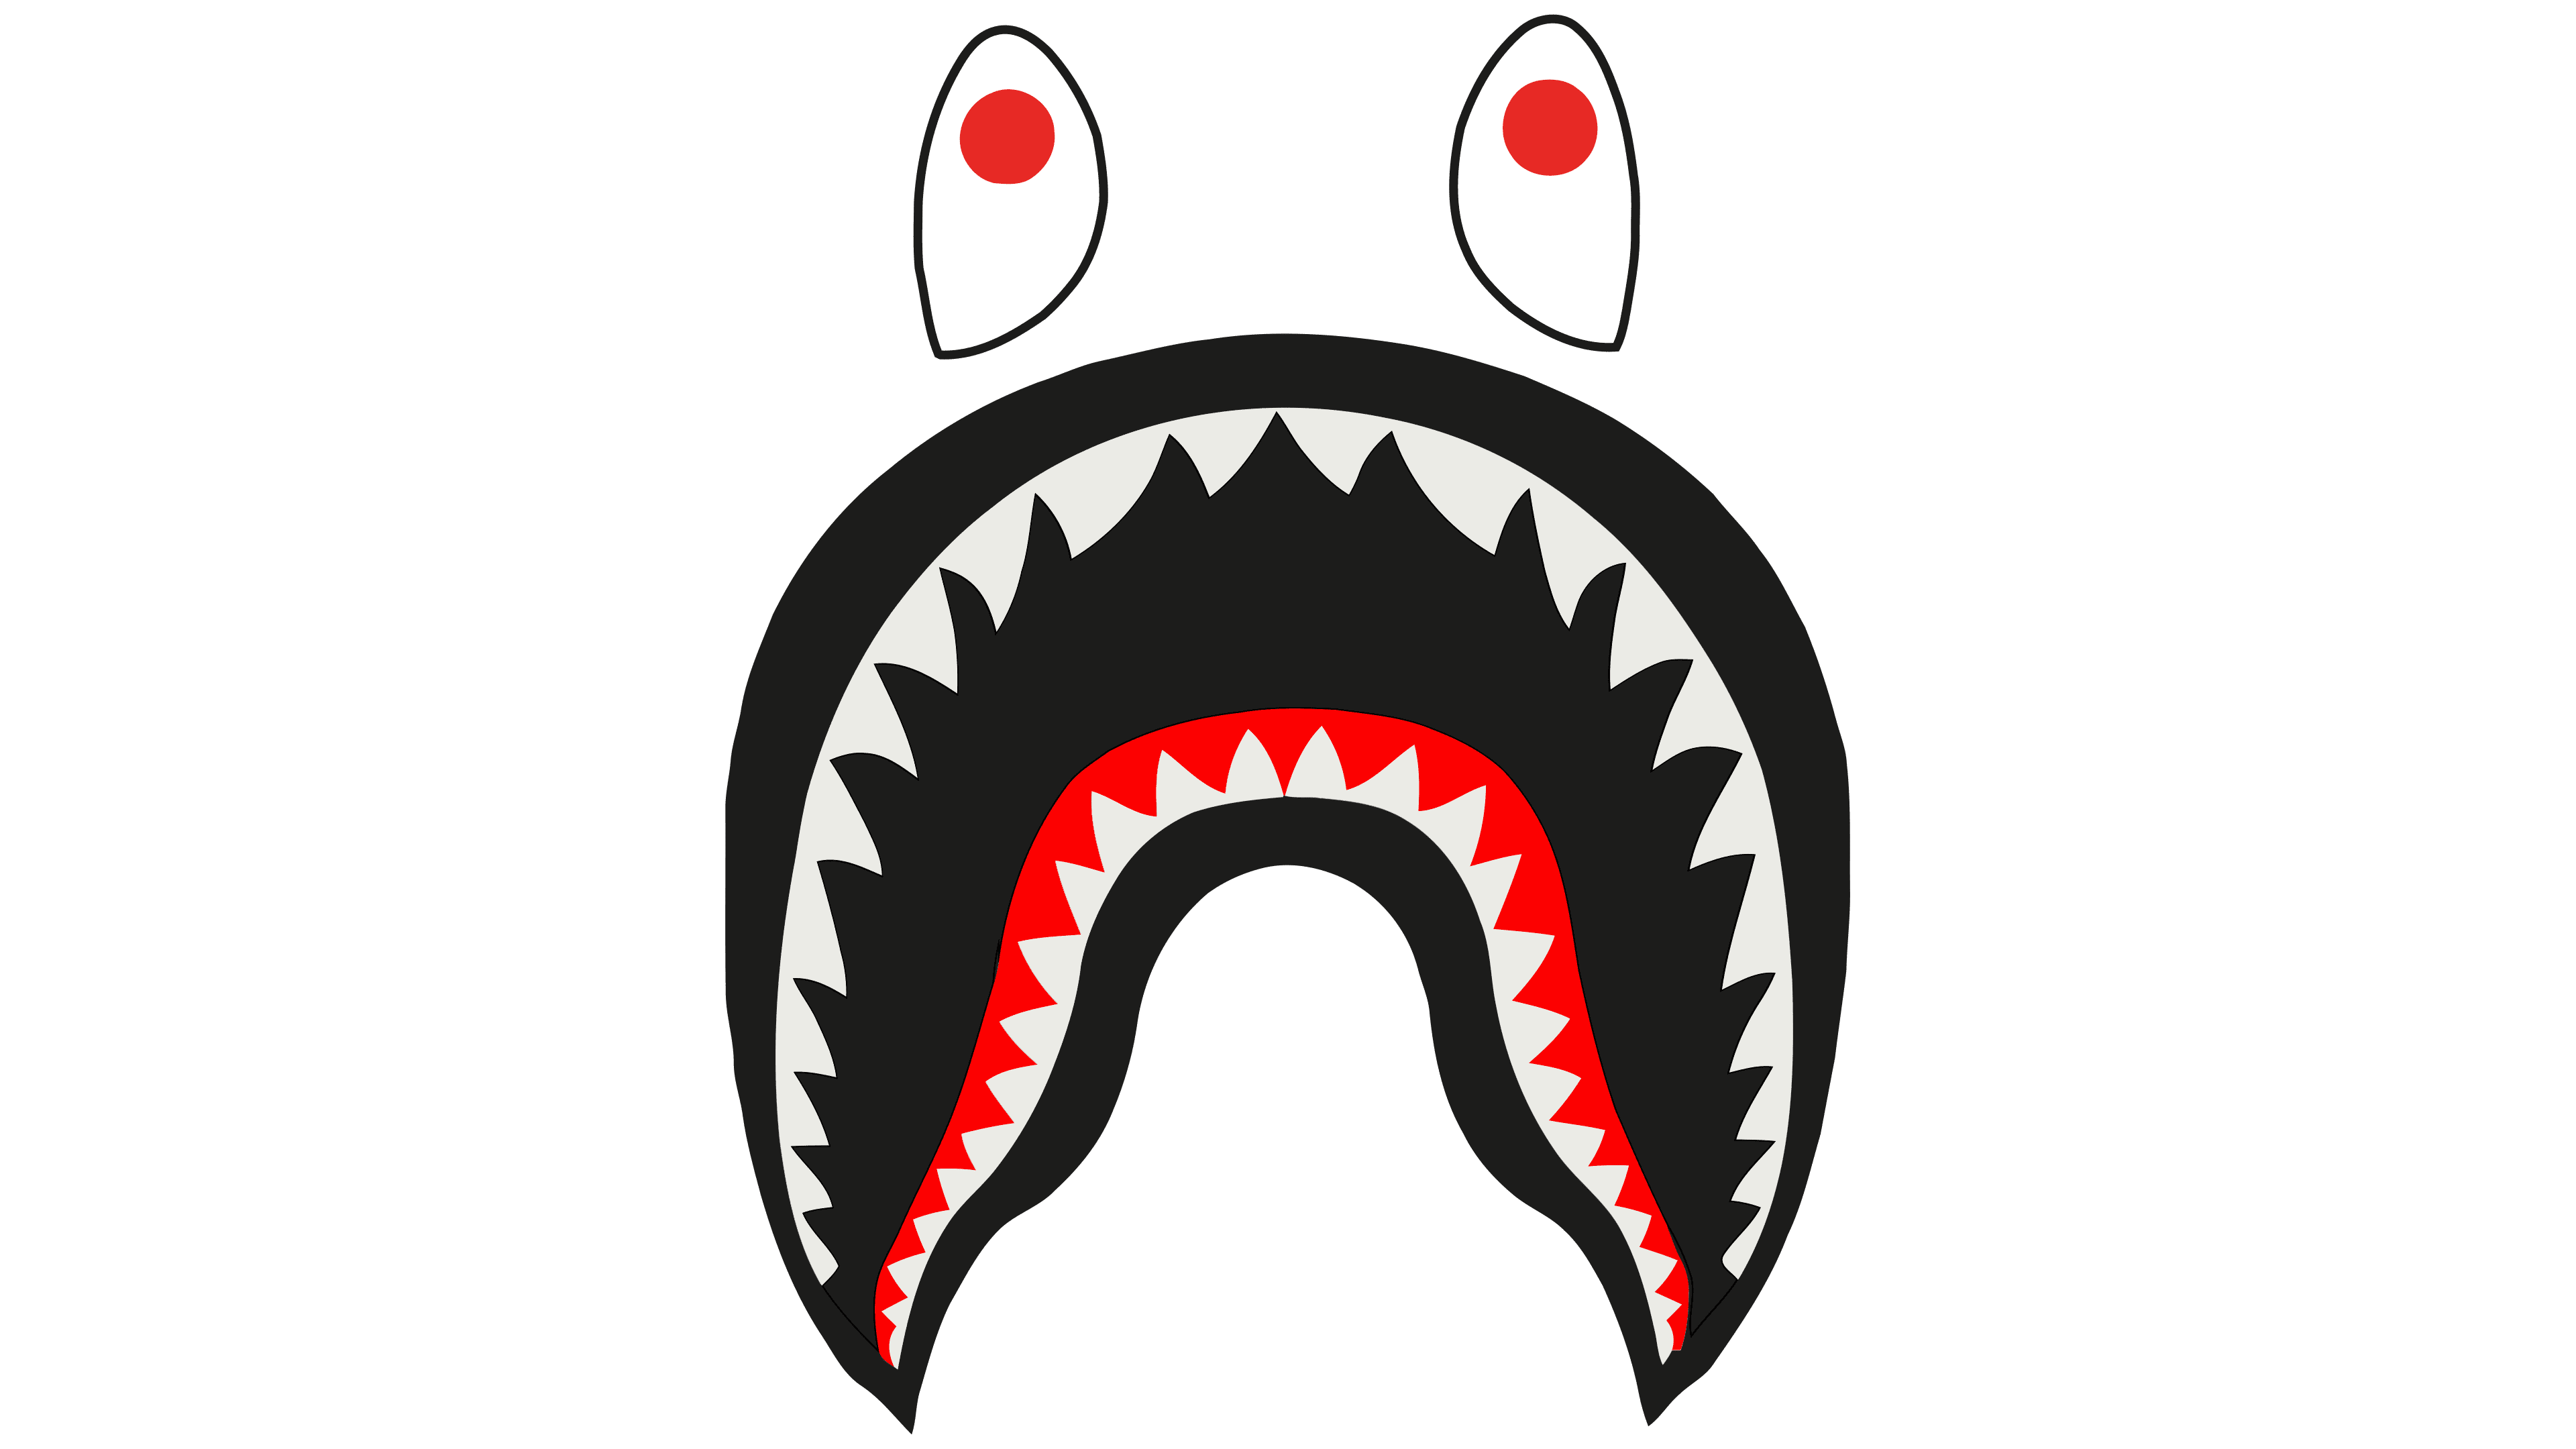 BAPE Shark Logo And Symbol, Meaning, History, PNG, Brand | tyello.com